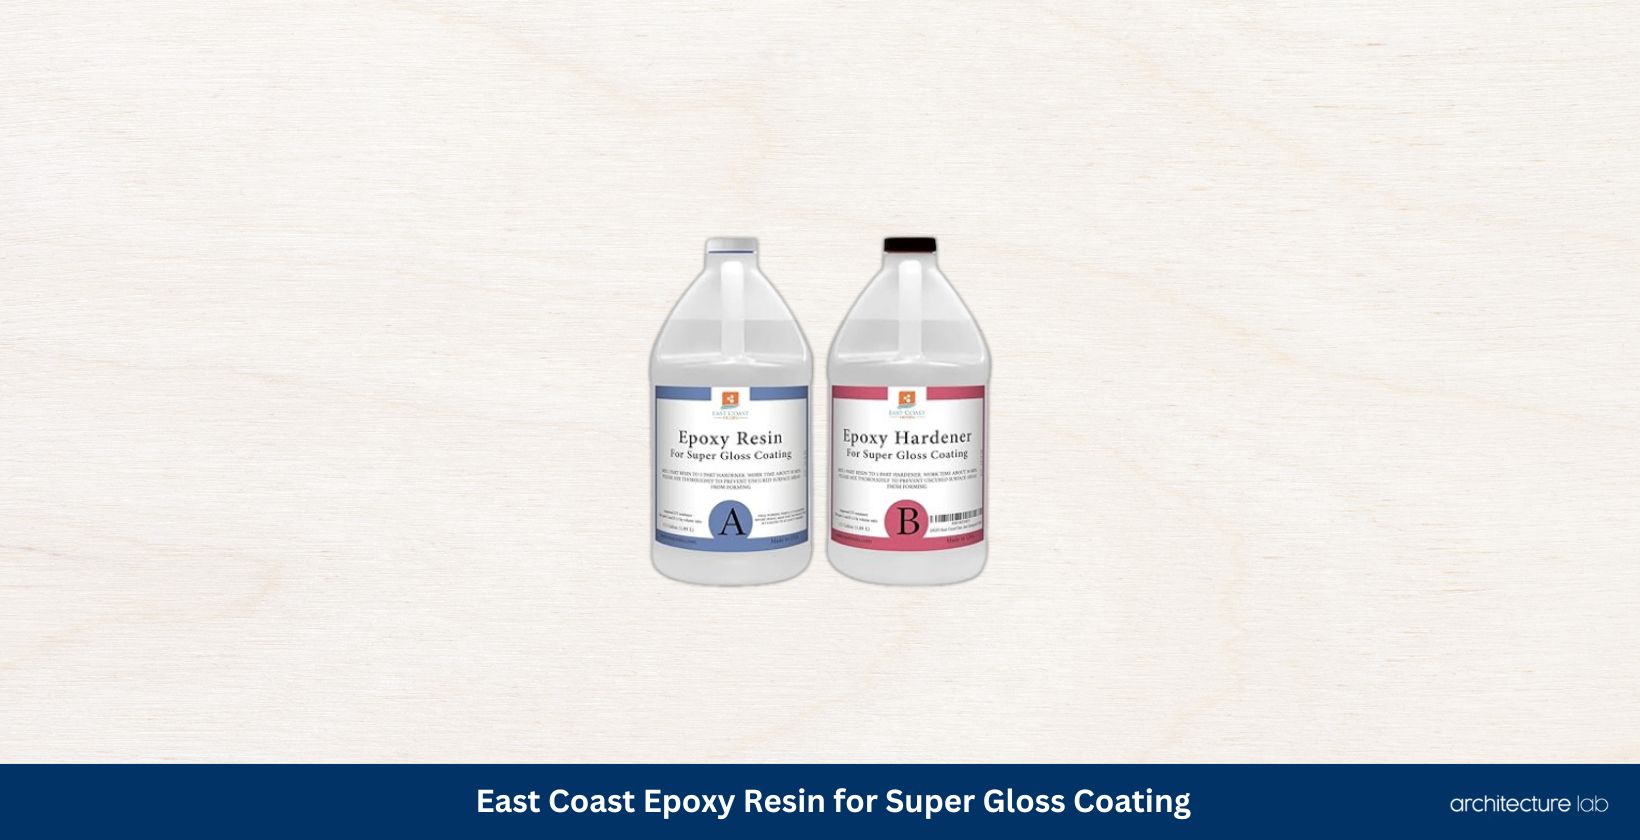 East coast epoxy resin for super gloss coating